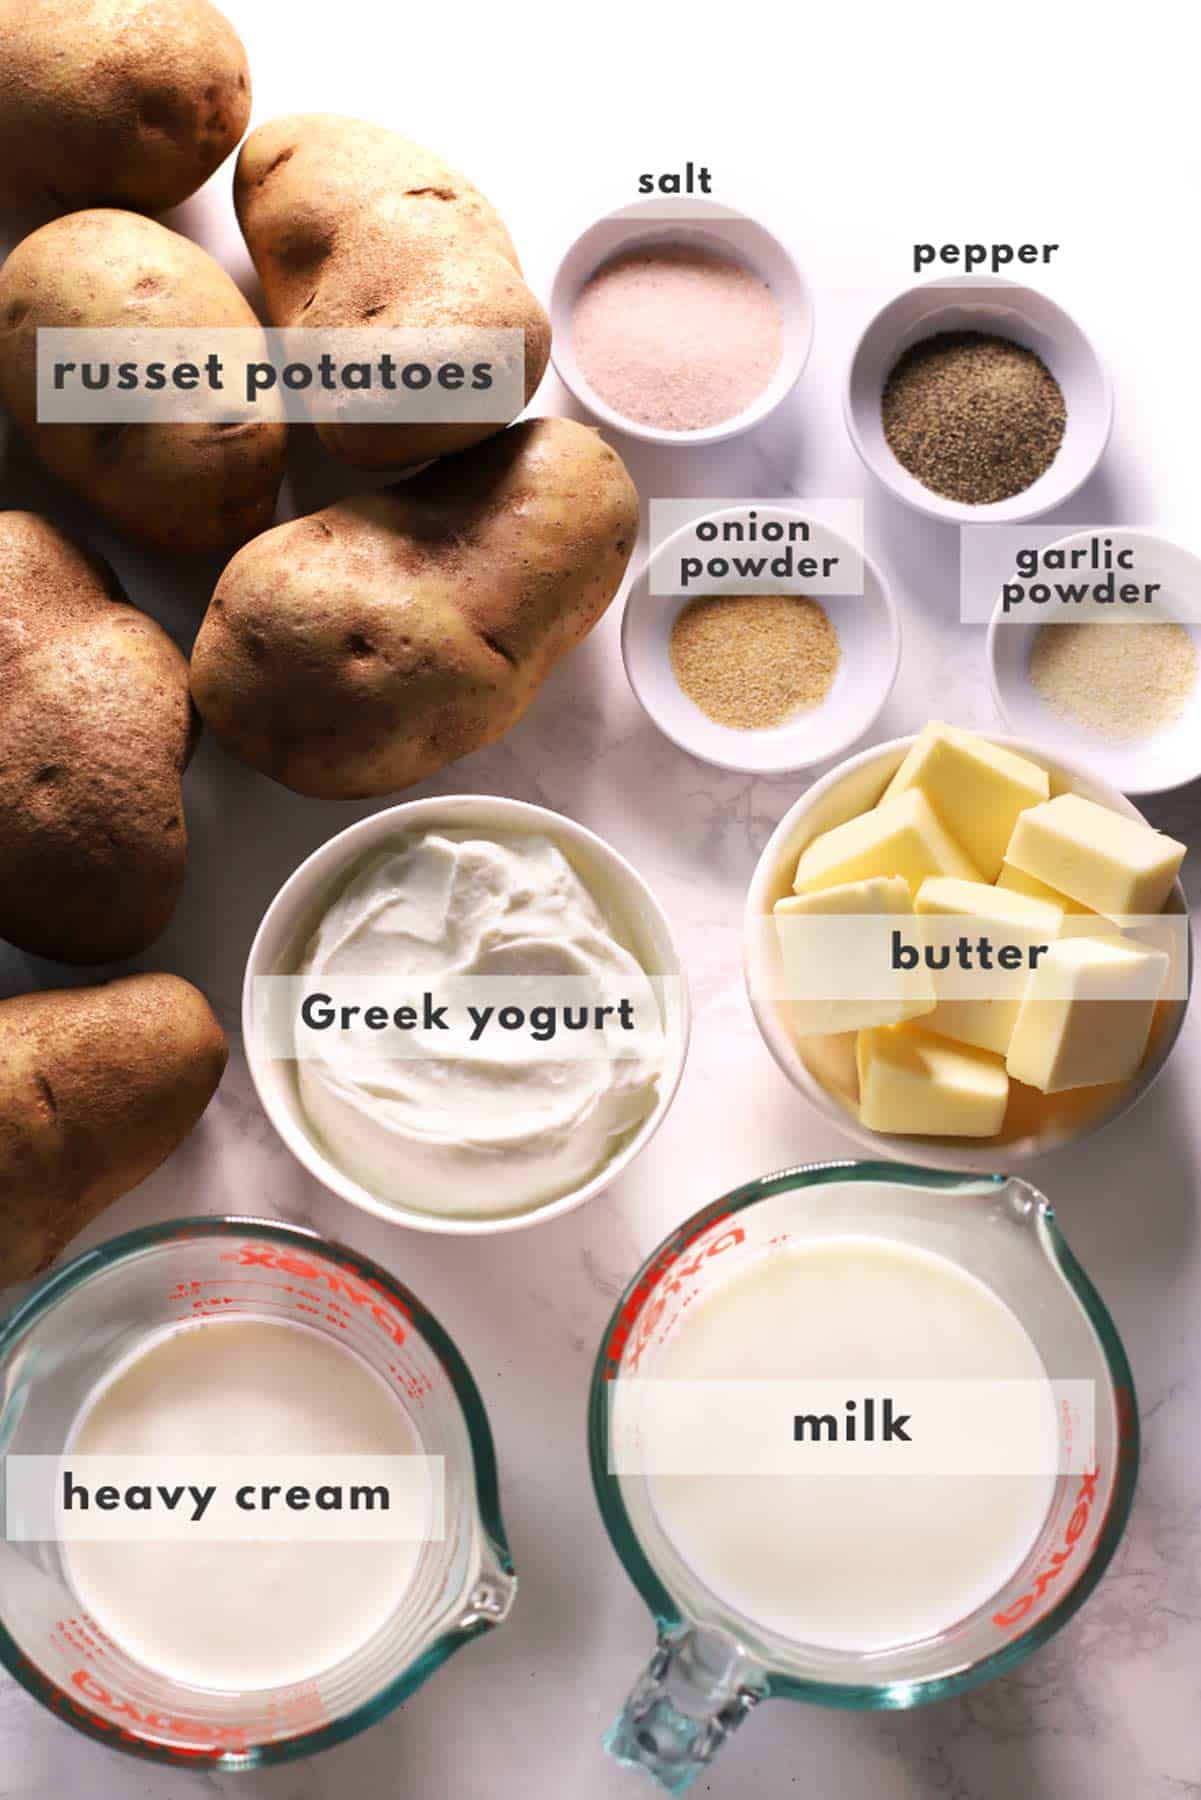 Mashed potato ingredients on marble surface. 